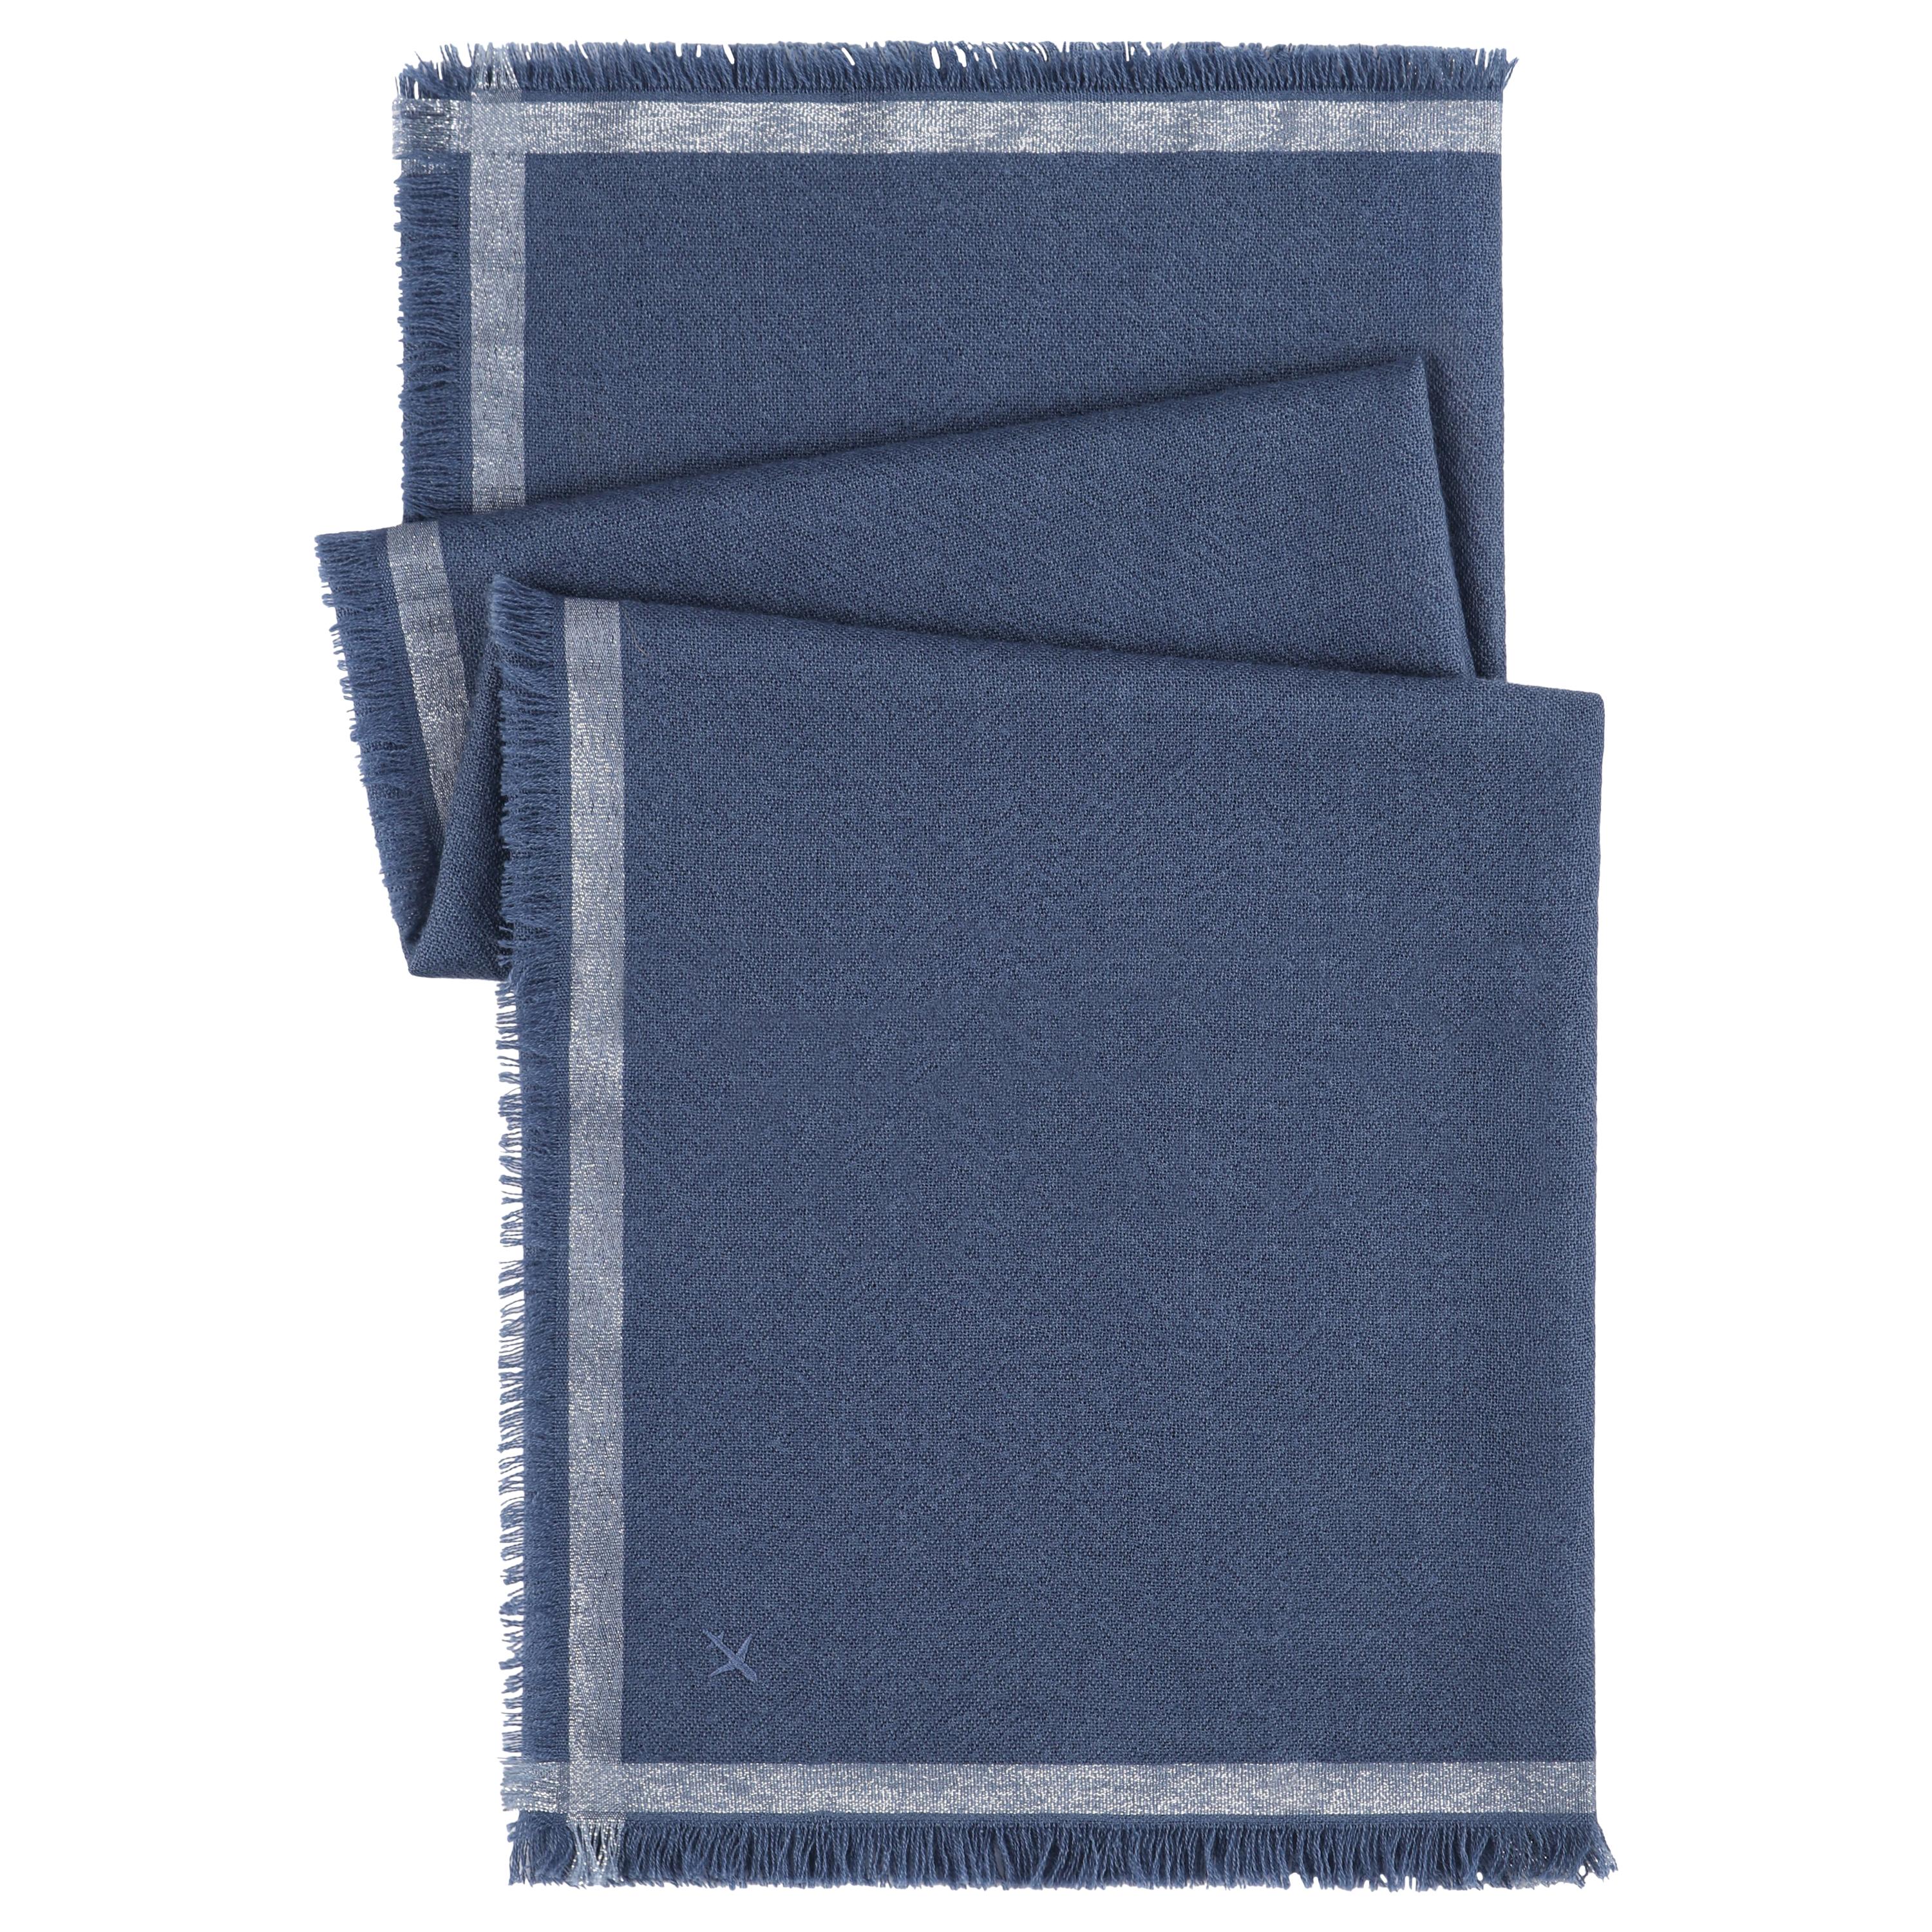 LORO PIANA “Quadrata Carre” Blue Silver Silk Cashmere Fringe Knit Travel Scarf